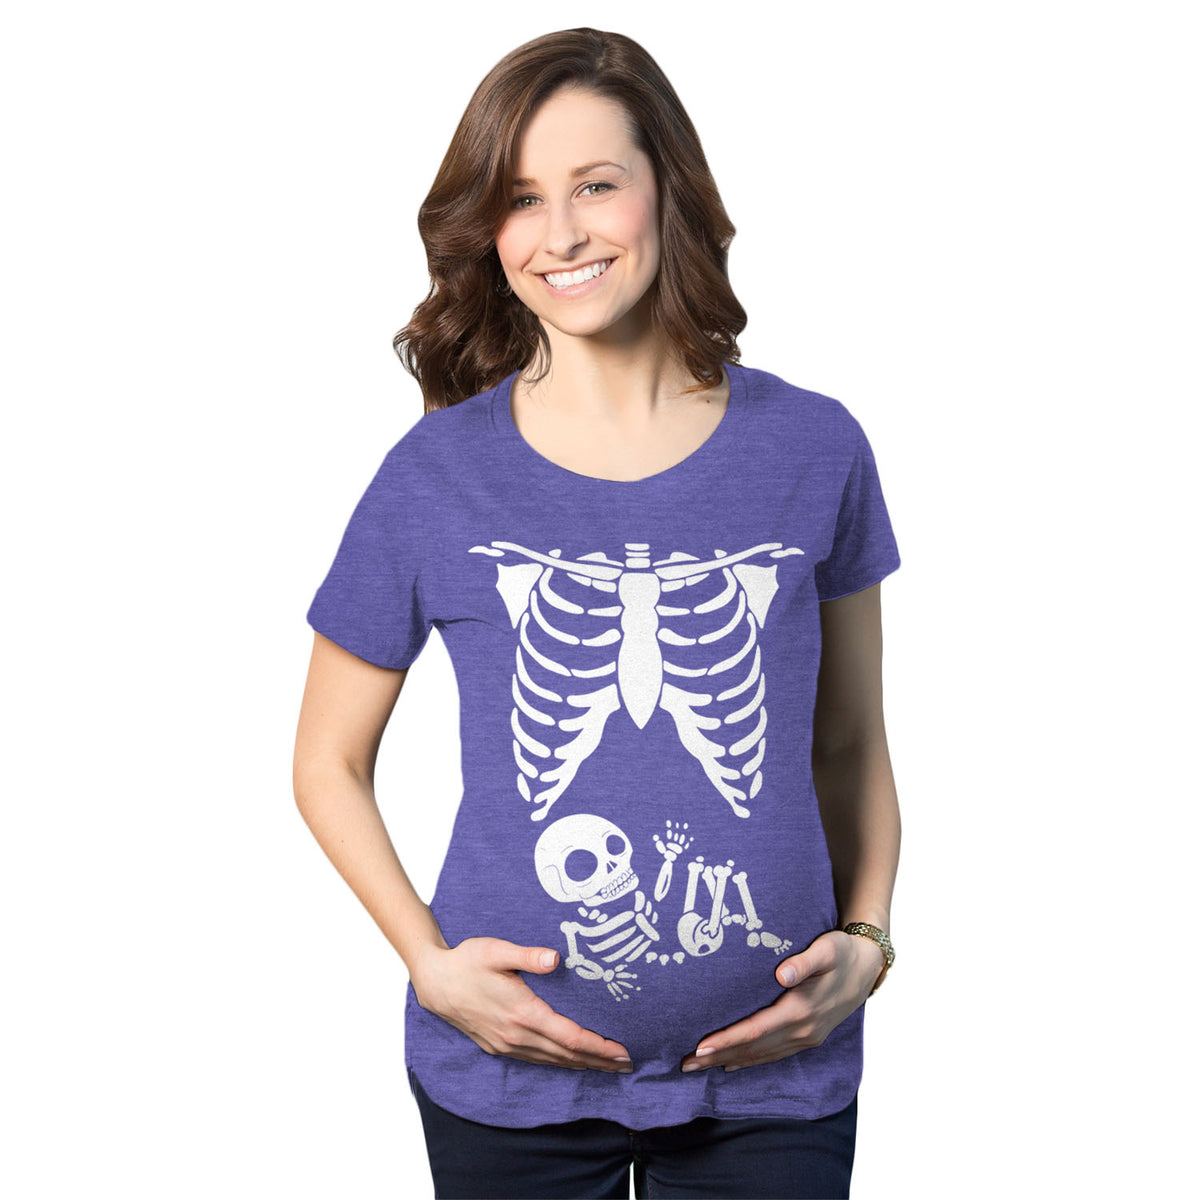 Funny Heather Purple White Skeleton Rib Cage Maternity T Shirt Nerdy Halloween Tee